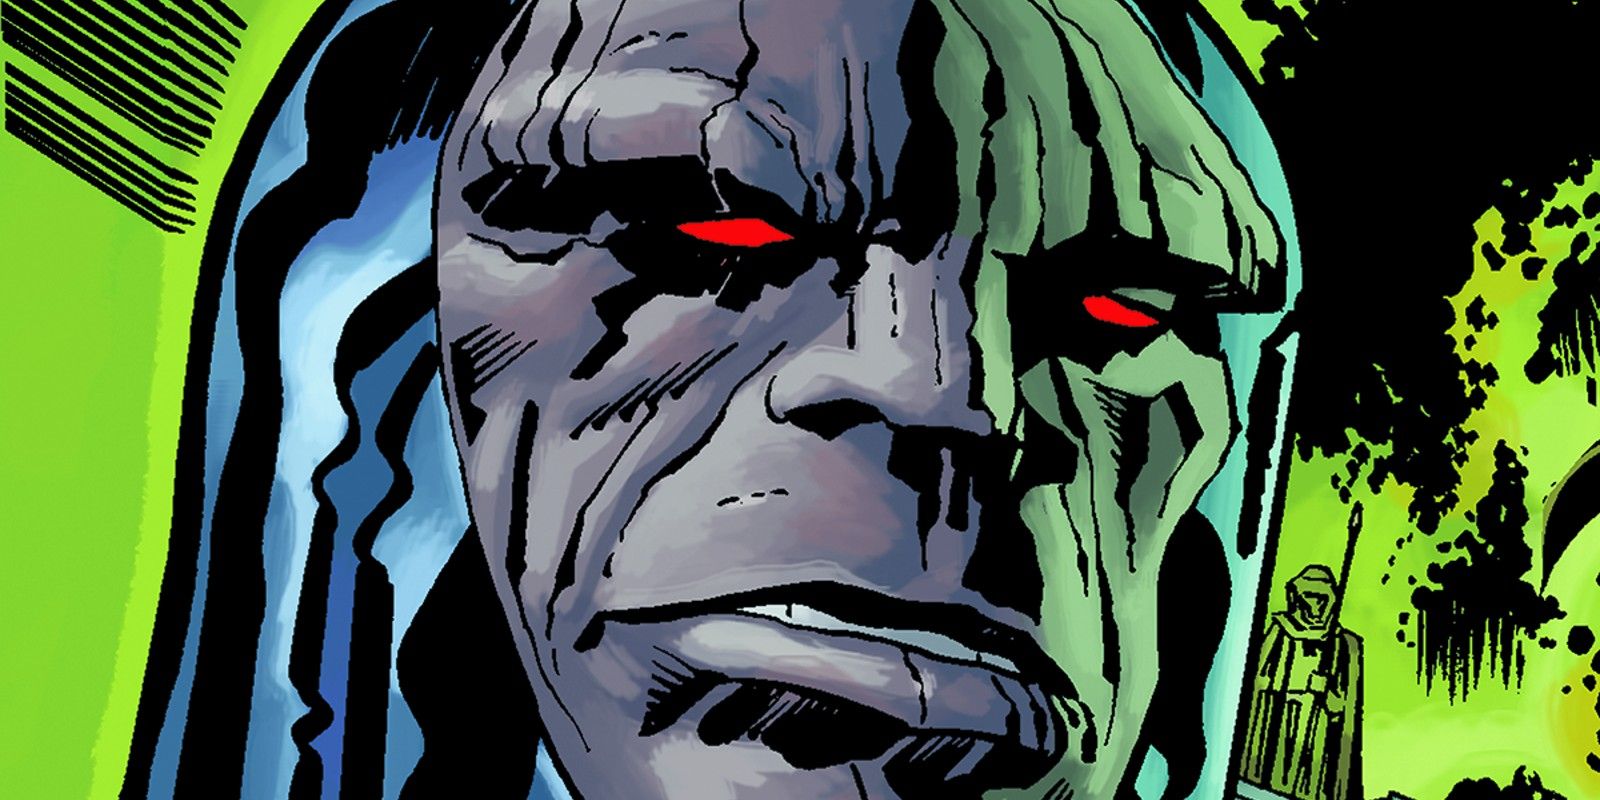 Featured Image: Close up of DC villain Darkseid